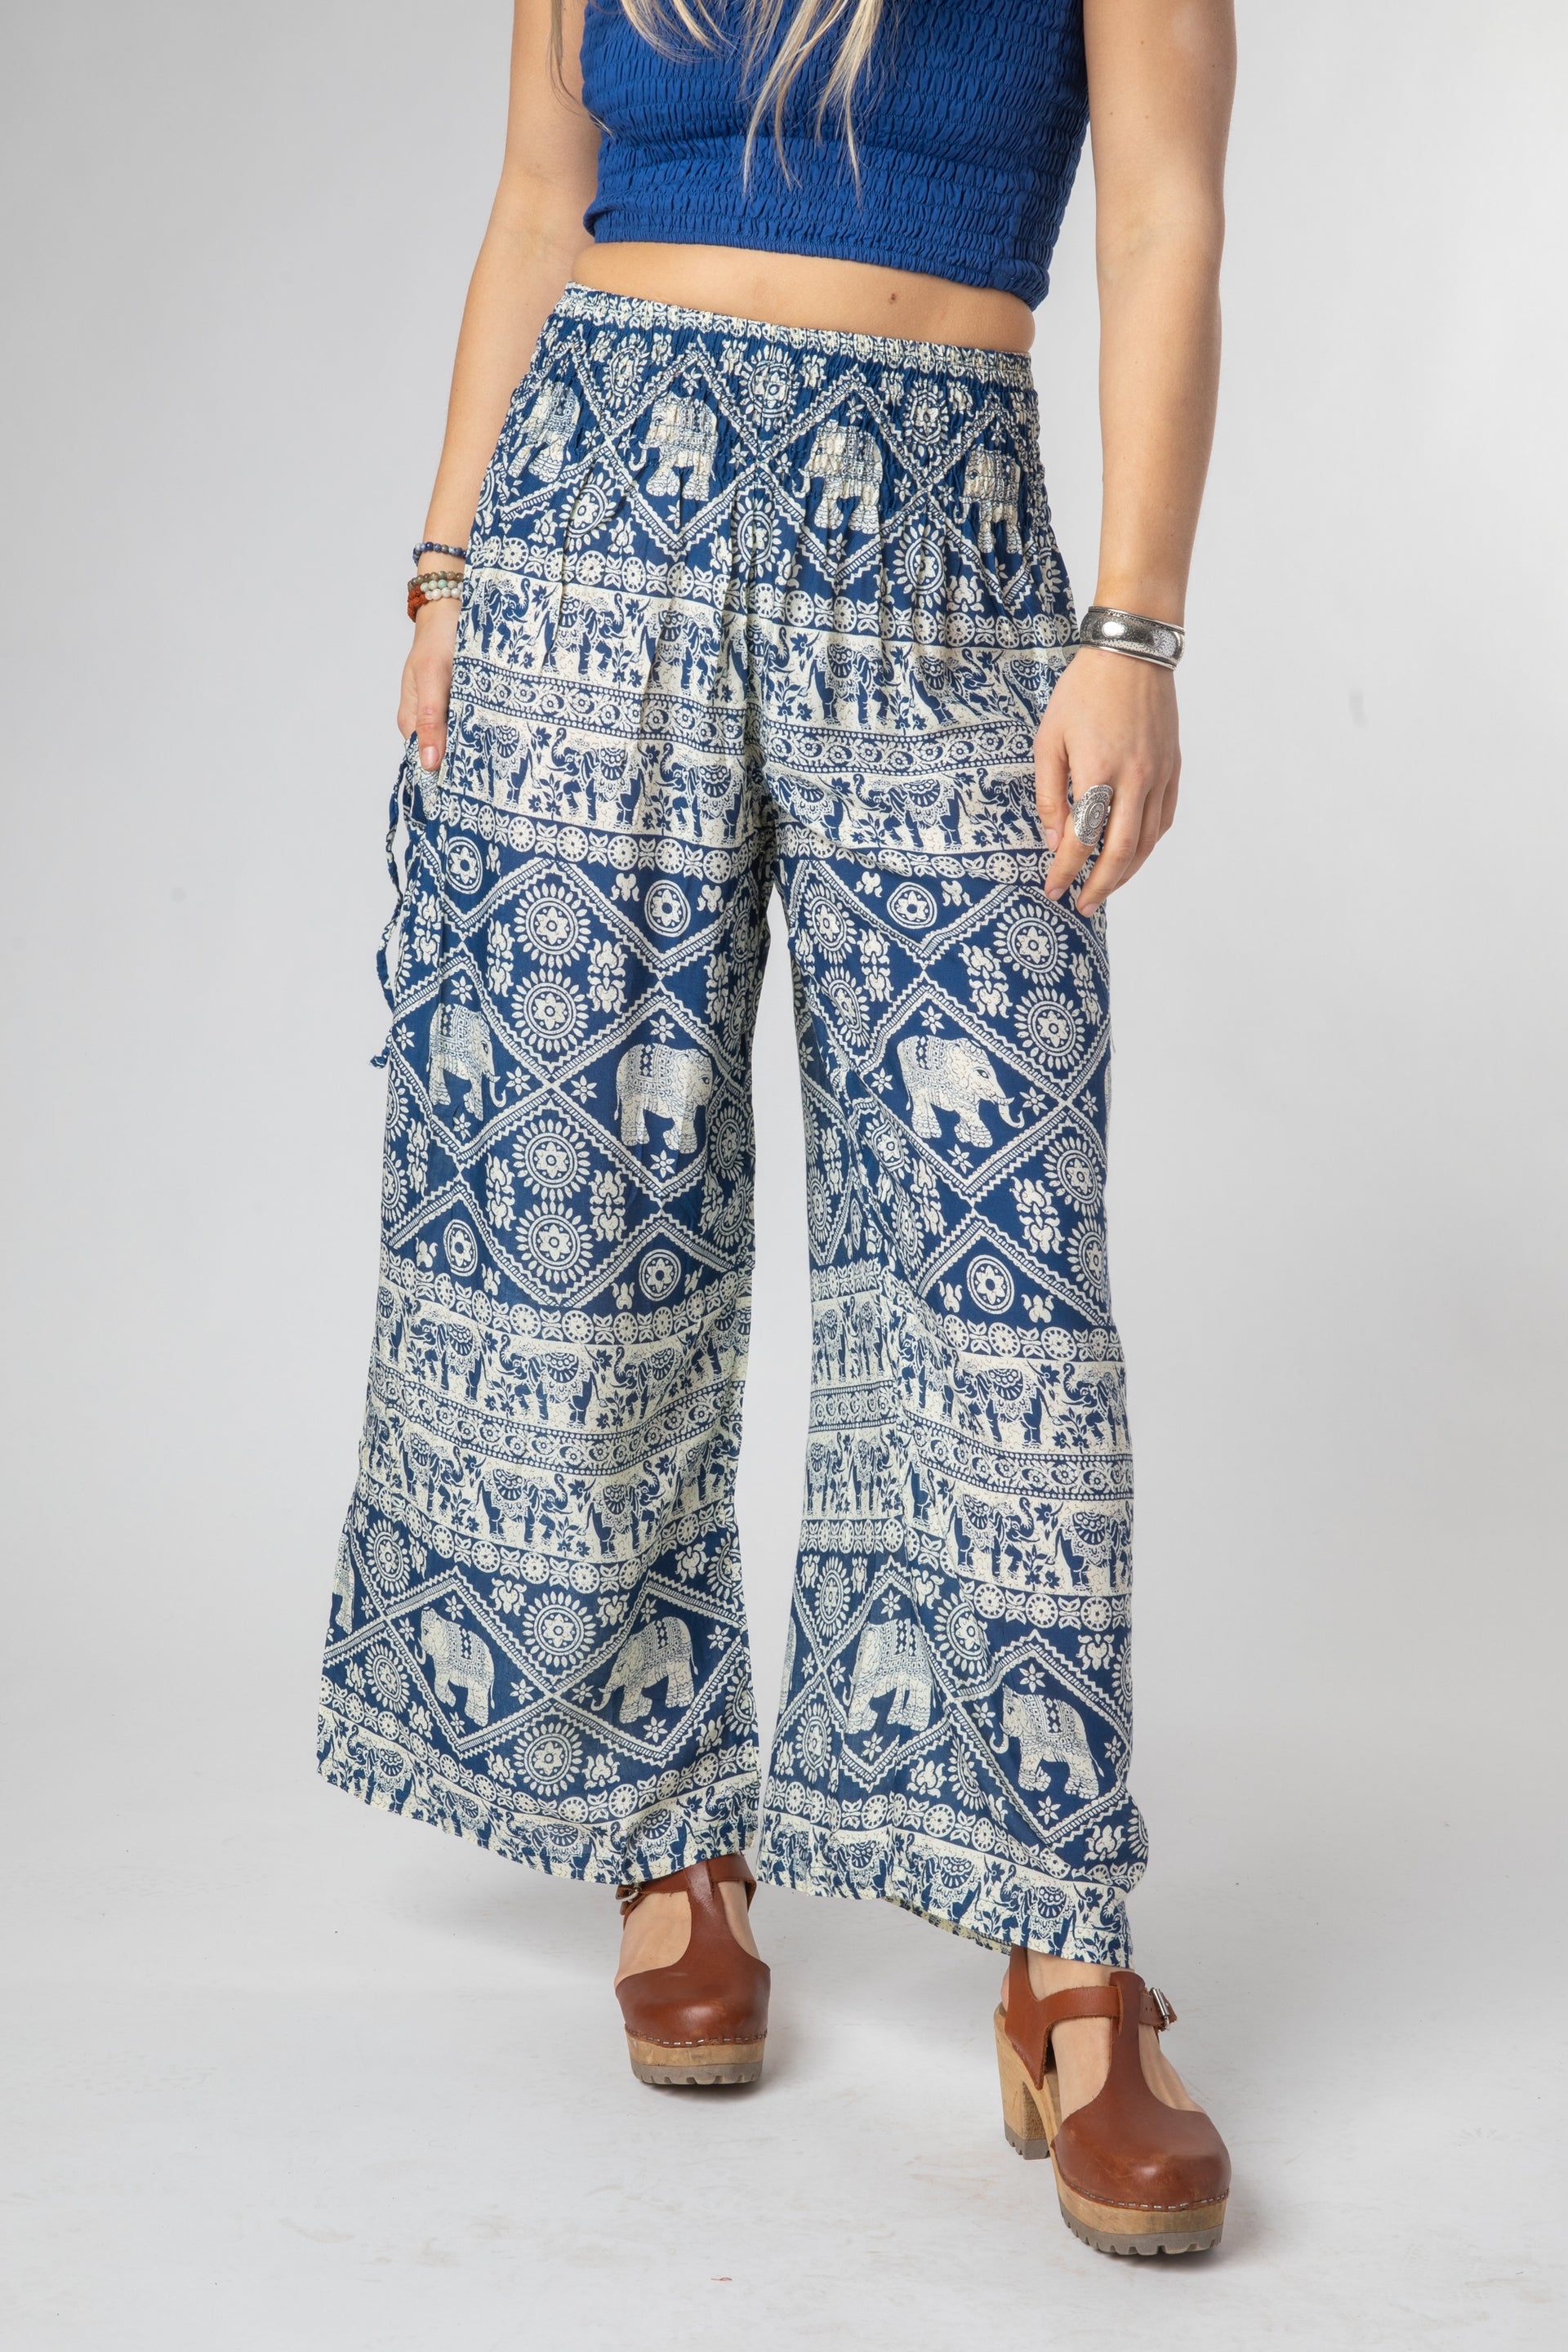 Devi Designs womens multicolor elephant print elastic waist pants